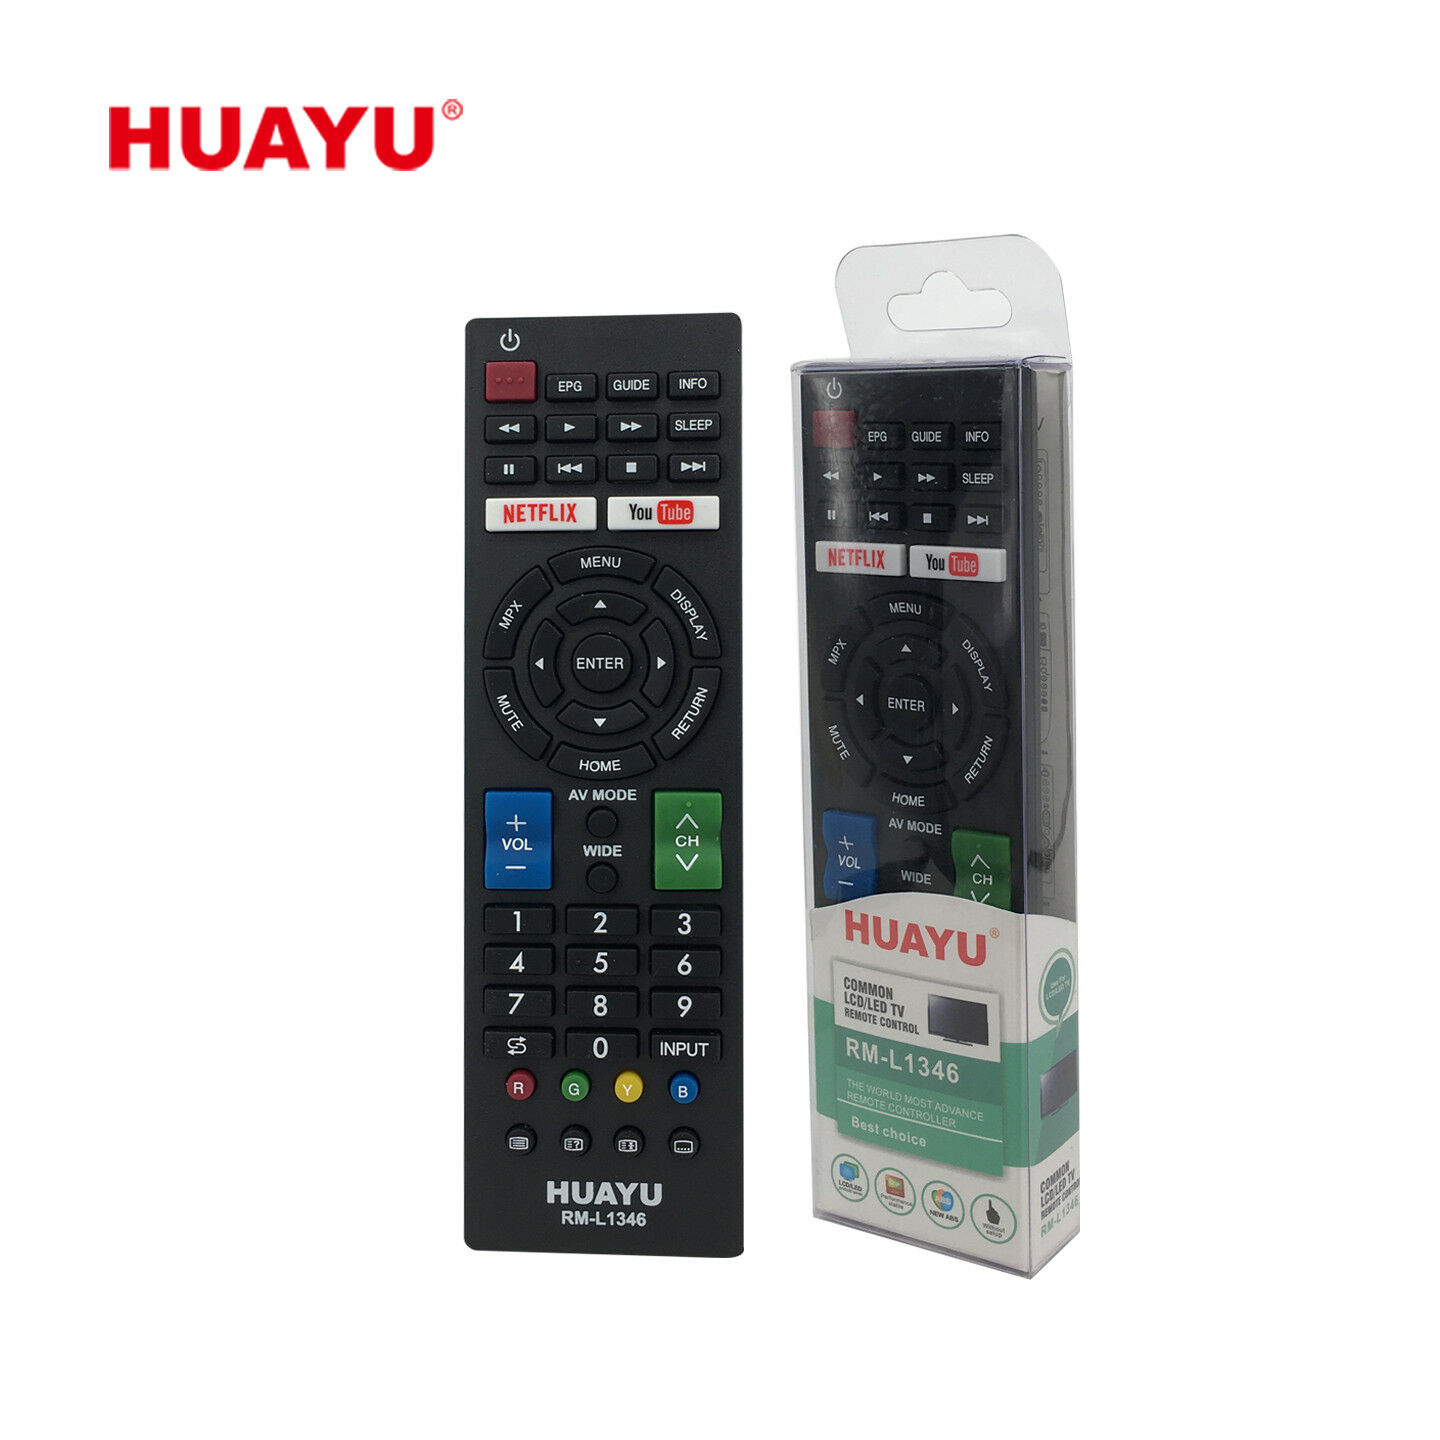 Sharp TV Compatible Remote Control- Huayu RM-L1346 LCD LED TV Remote Control